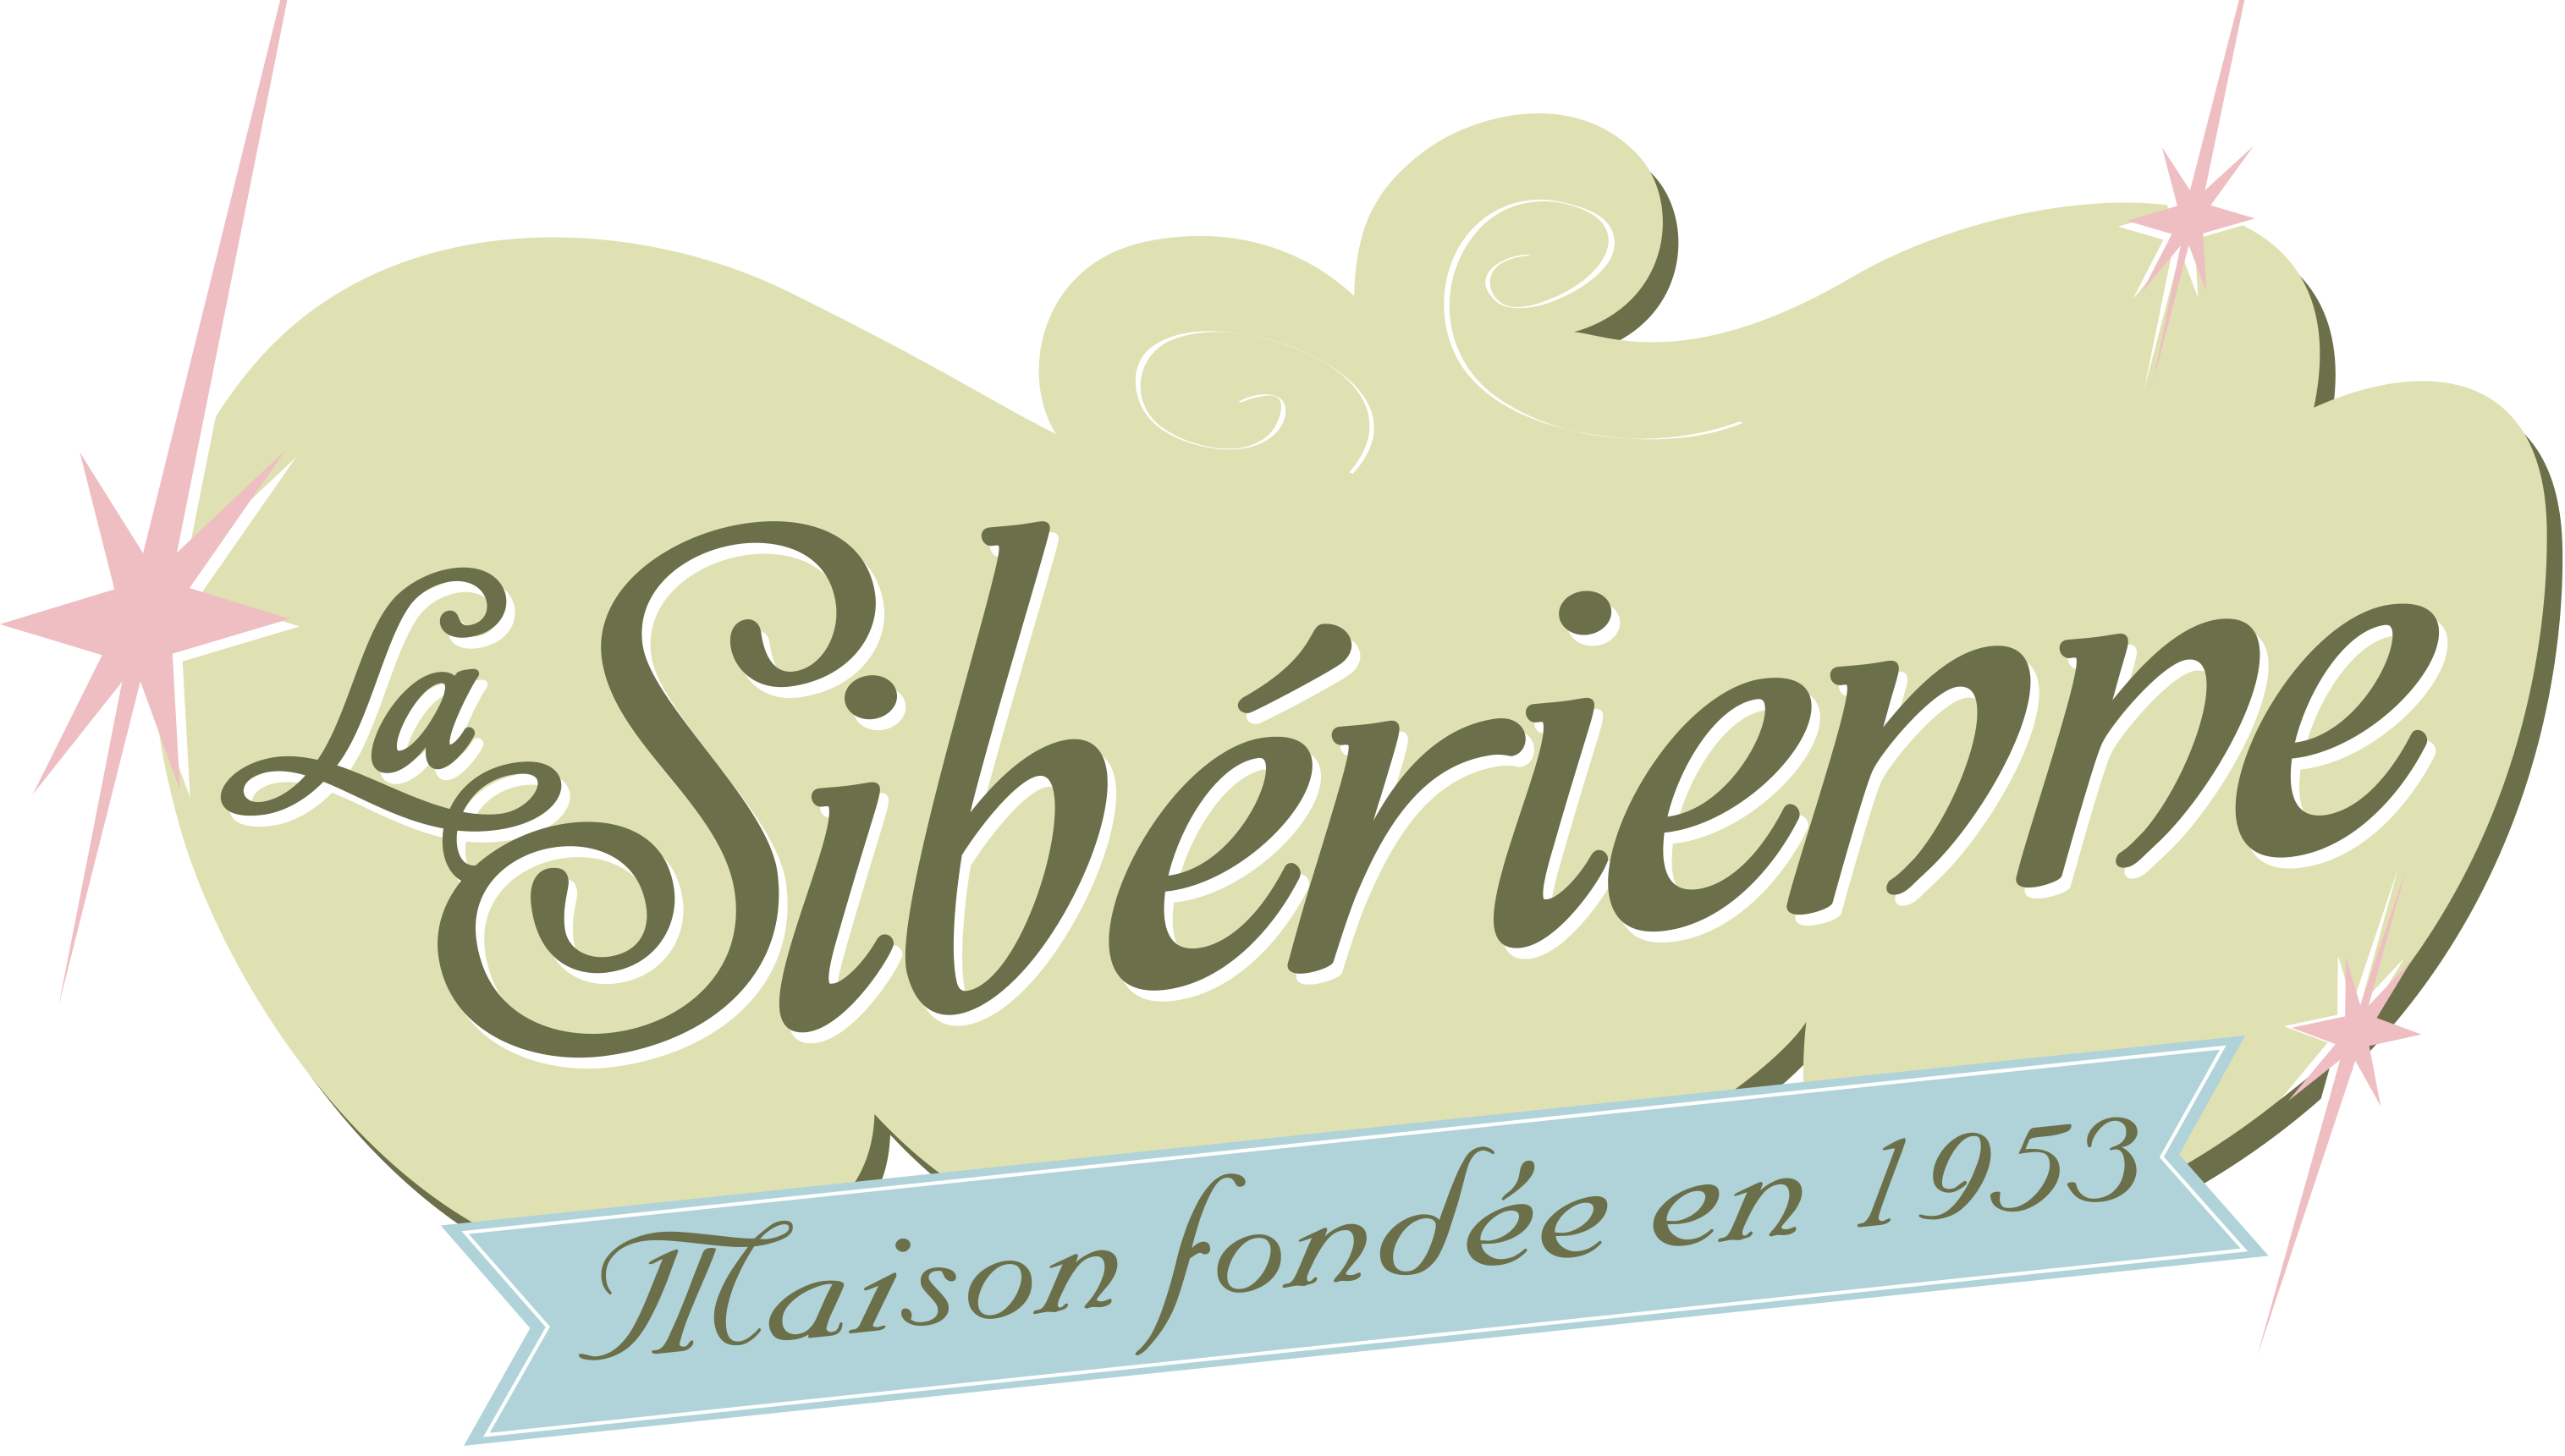 la-siberienne-glaces-artisanales-aix-les-bains-chambery-logo-full